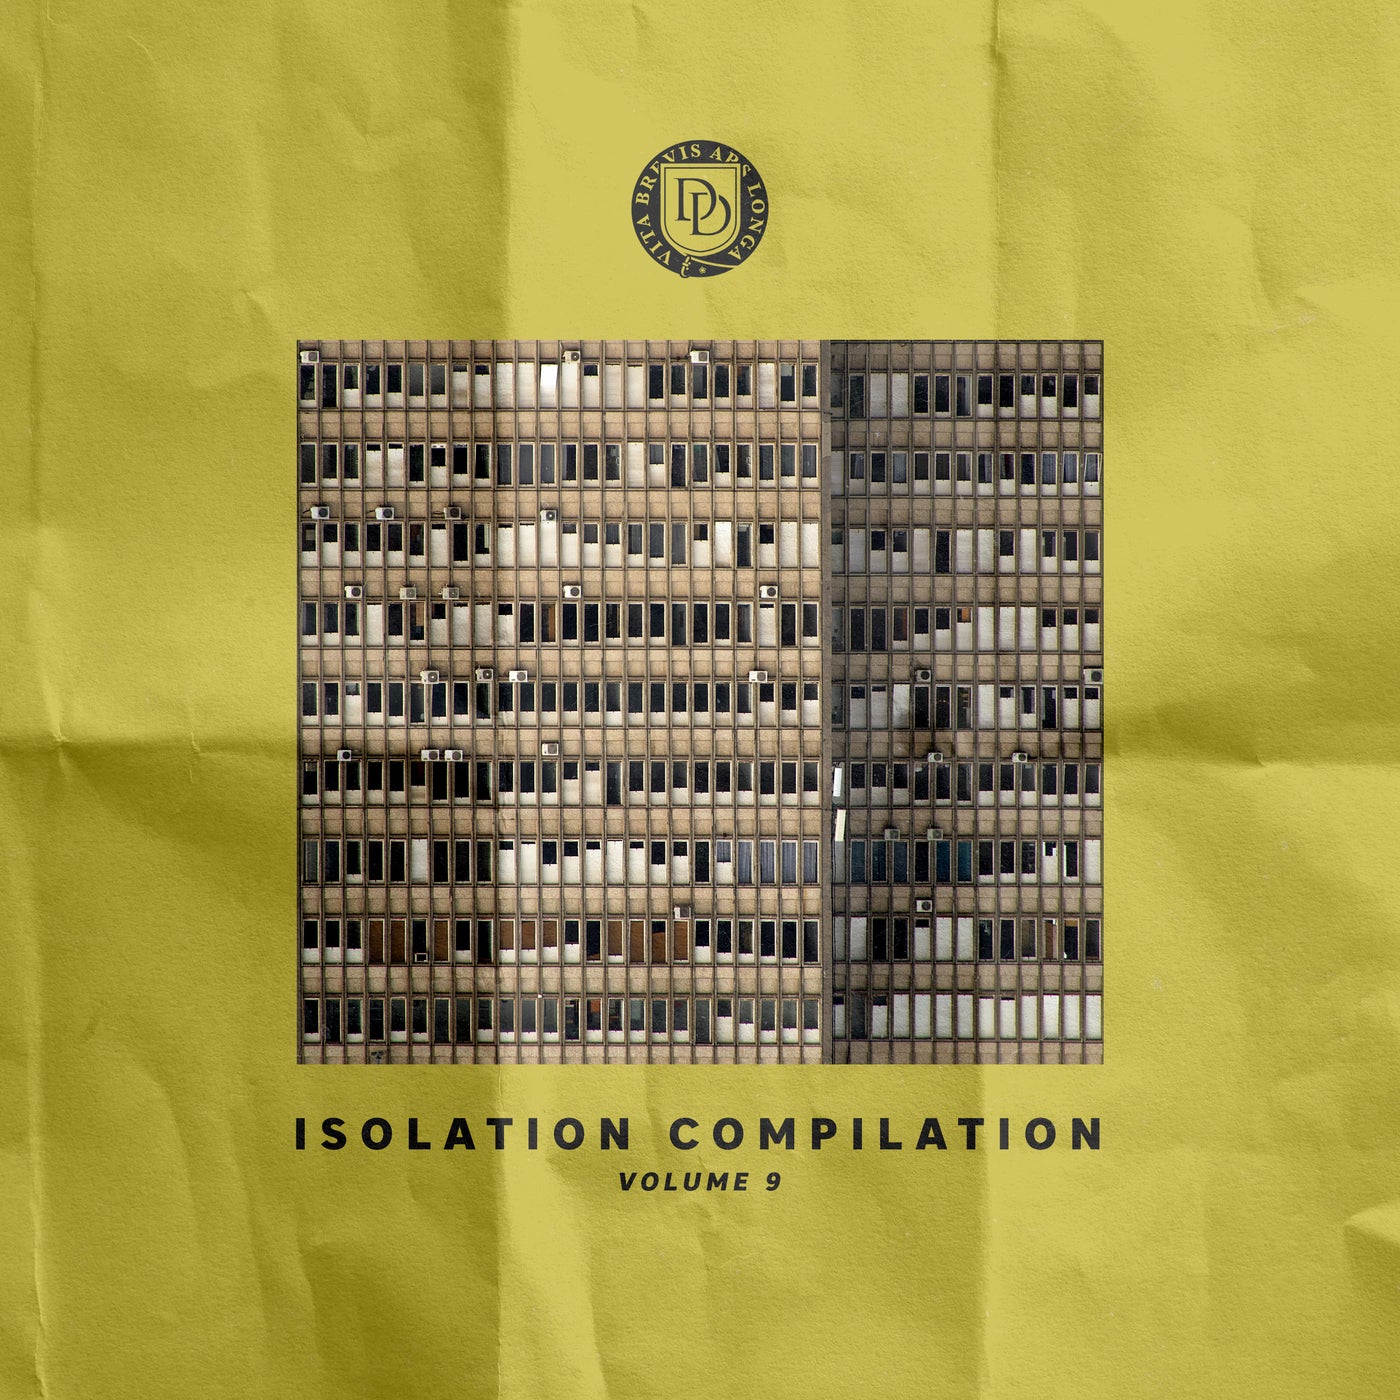 ISOLATION COMPILATION VOLUME 9